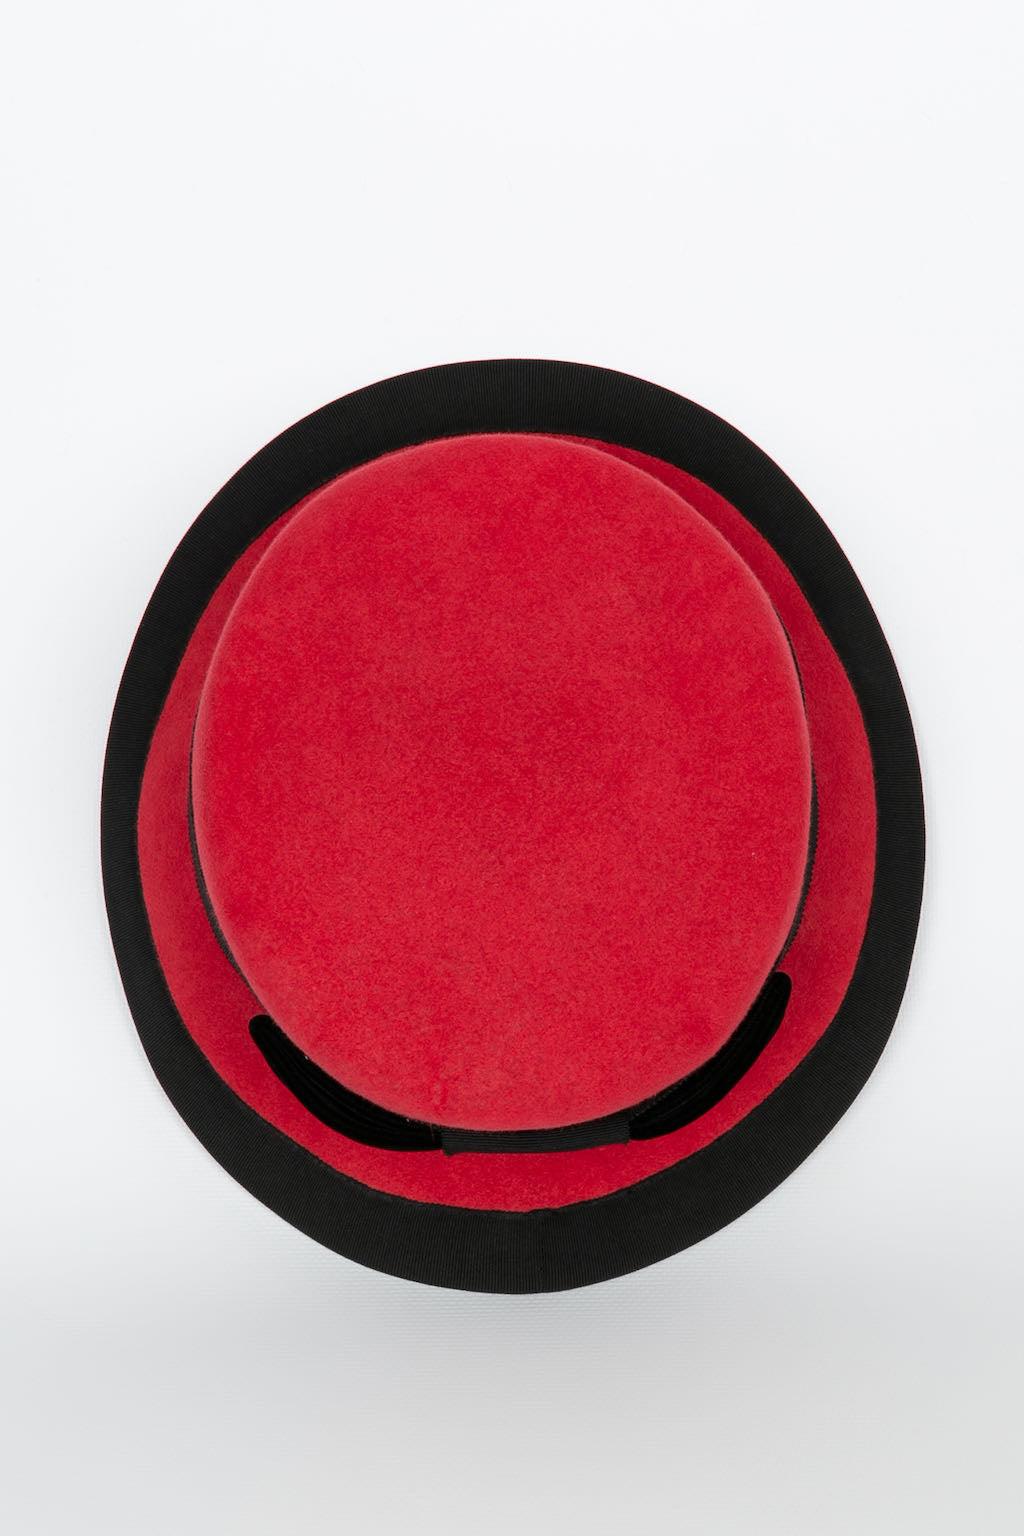 Yves Saint Laurent Red and Black Catwalk Hat 2